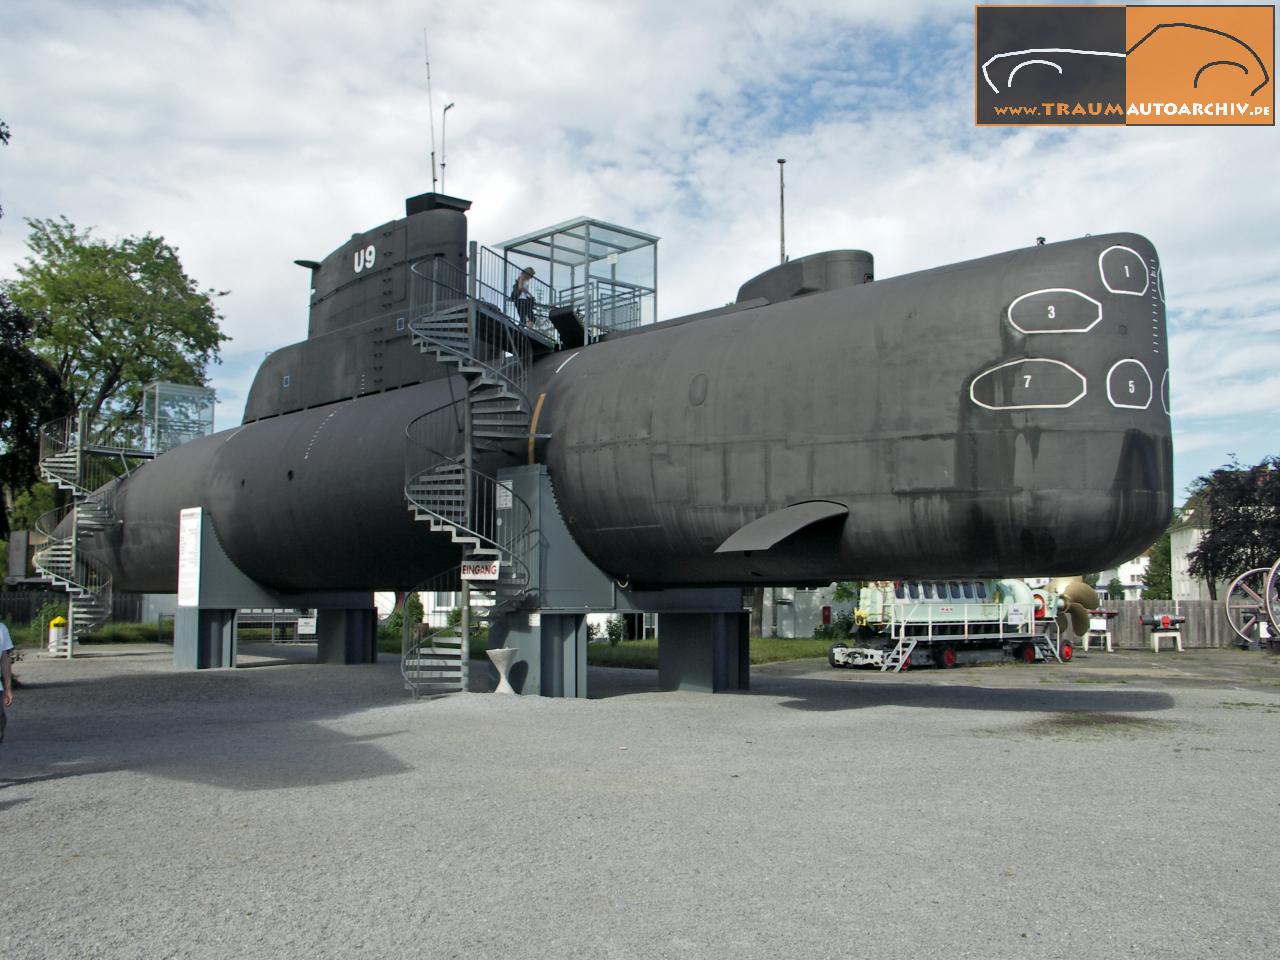 Unterseeboot U9 '1967 (1).jpg 152.8K